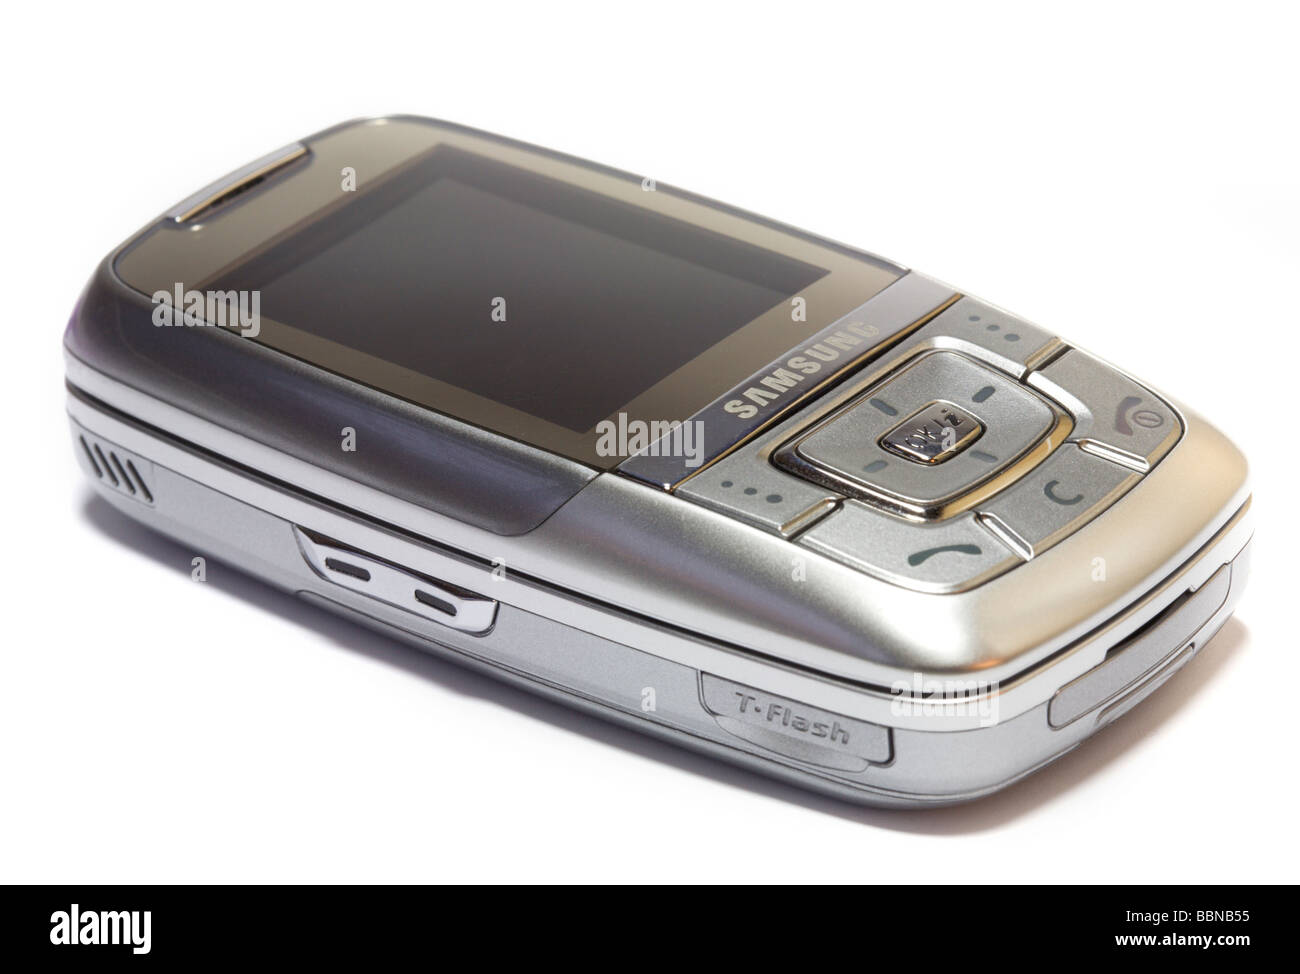 Samsung D600 Mobile Phone Stock Photo